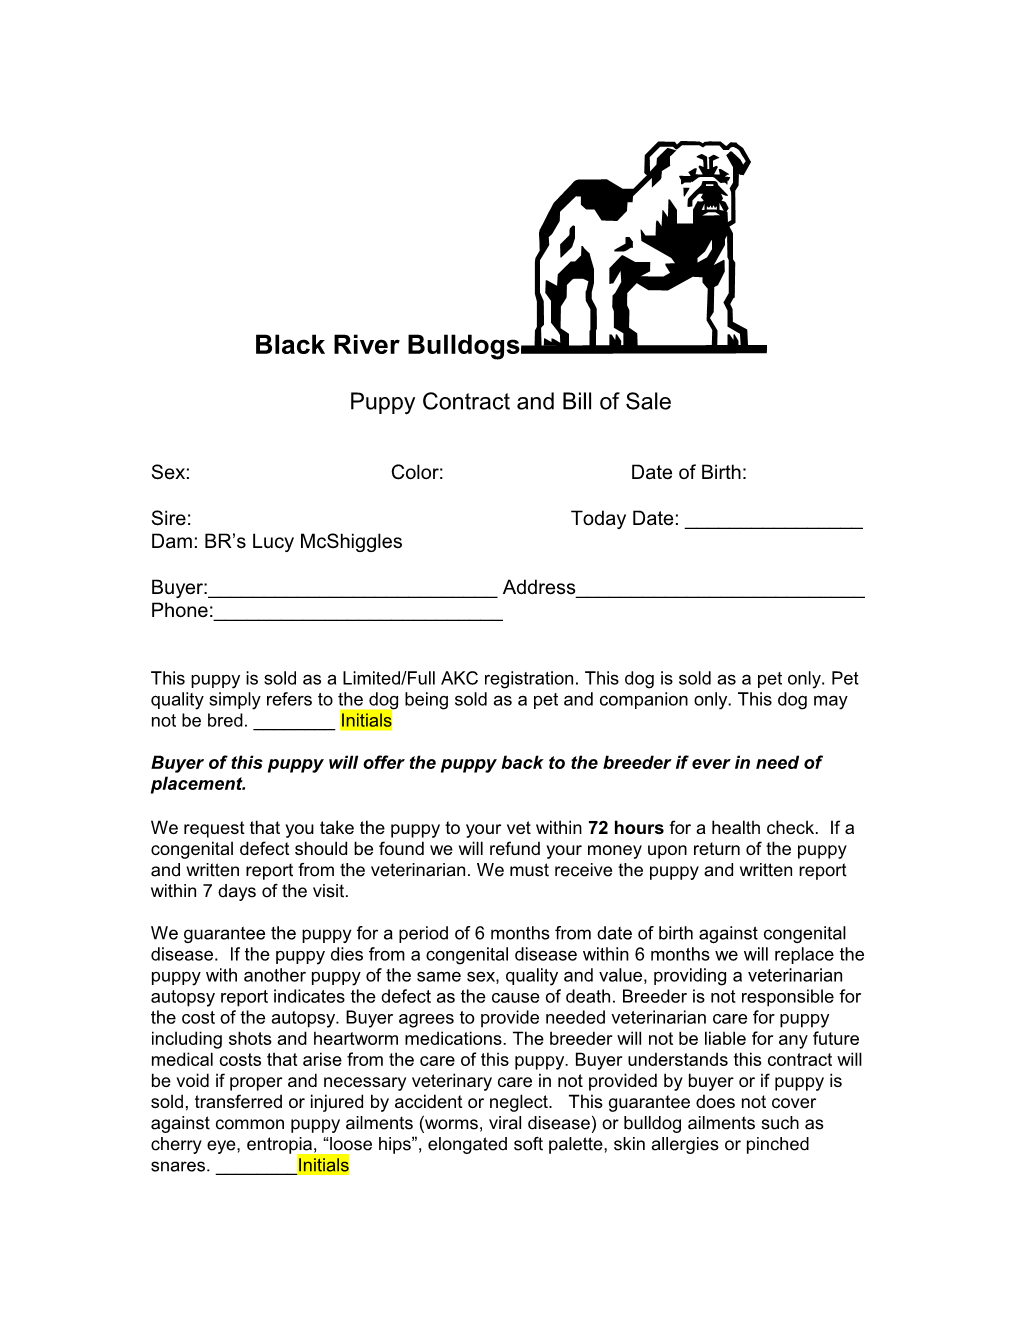 Black River Bulldogs